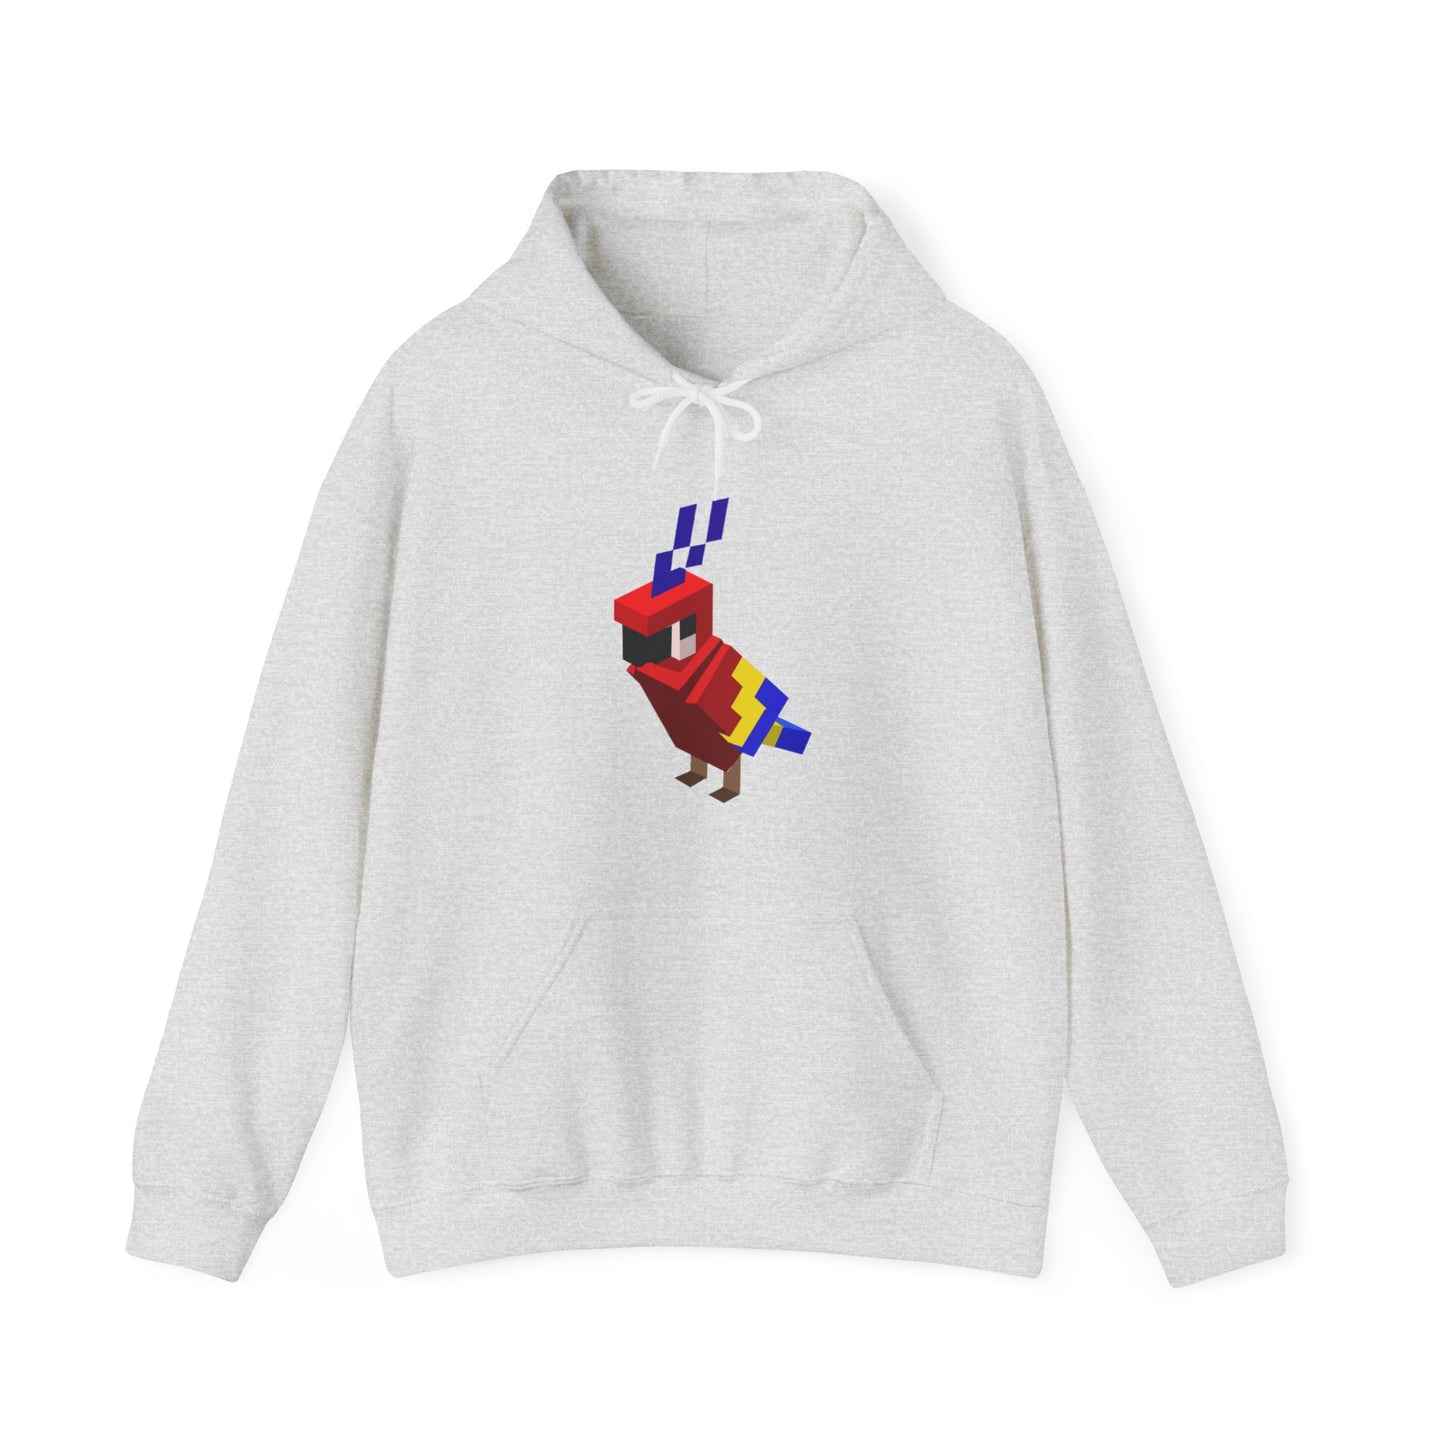 Arcade Parrot Hooded Sweatshirt